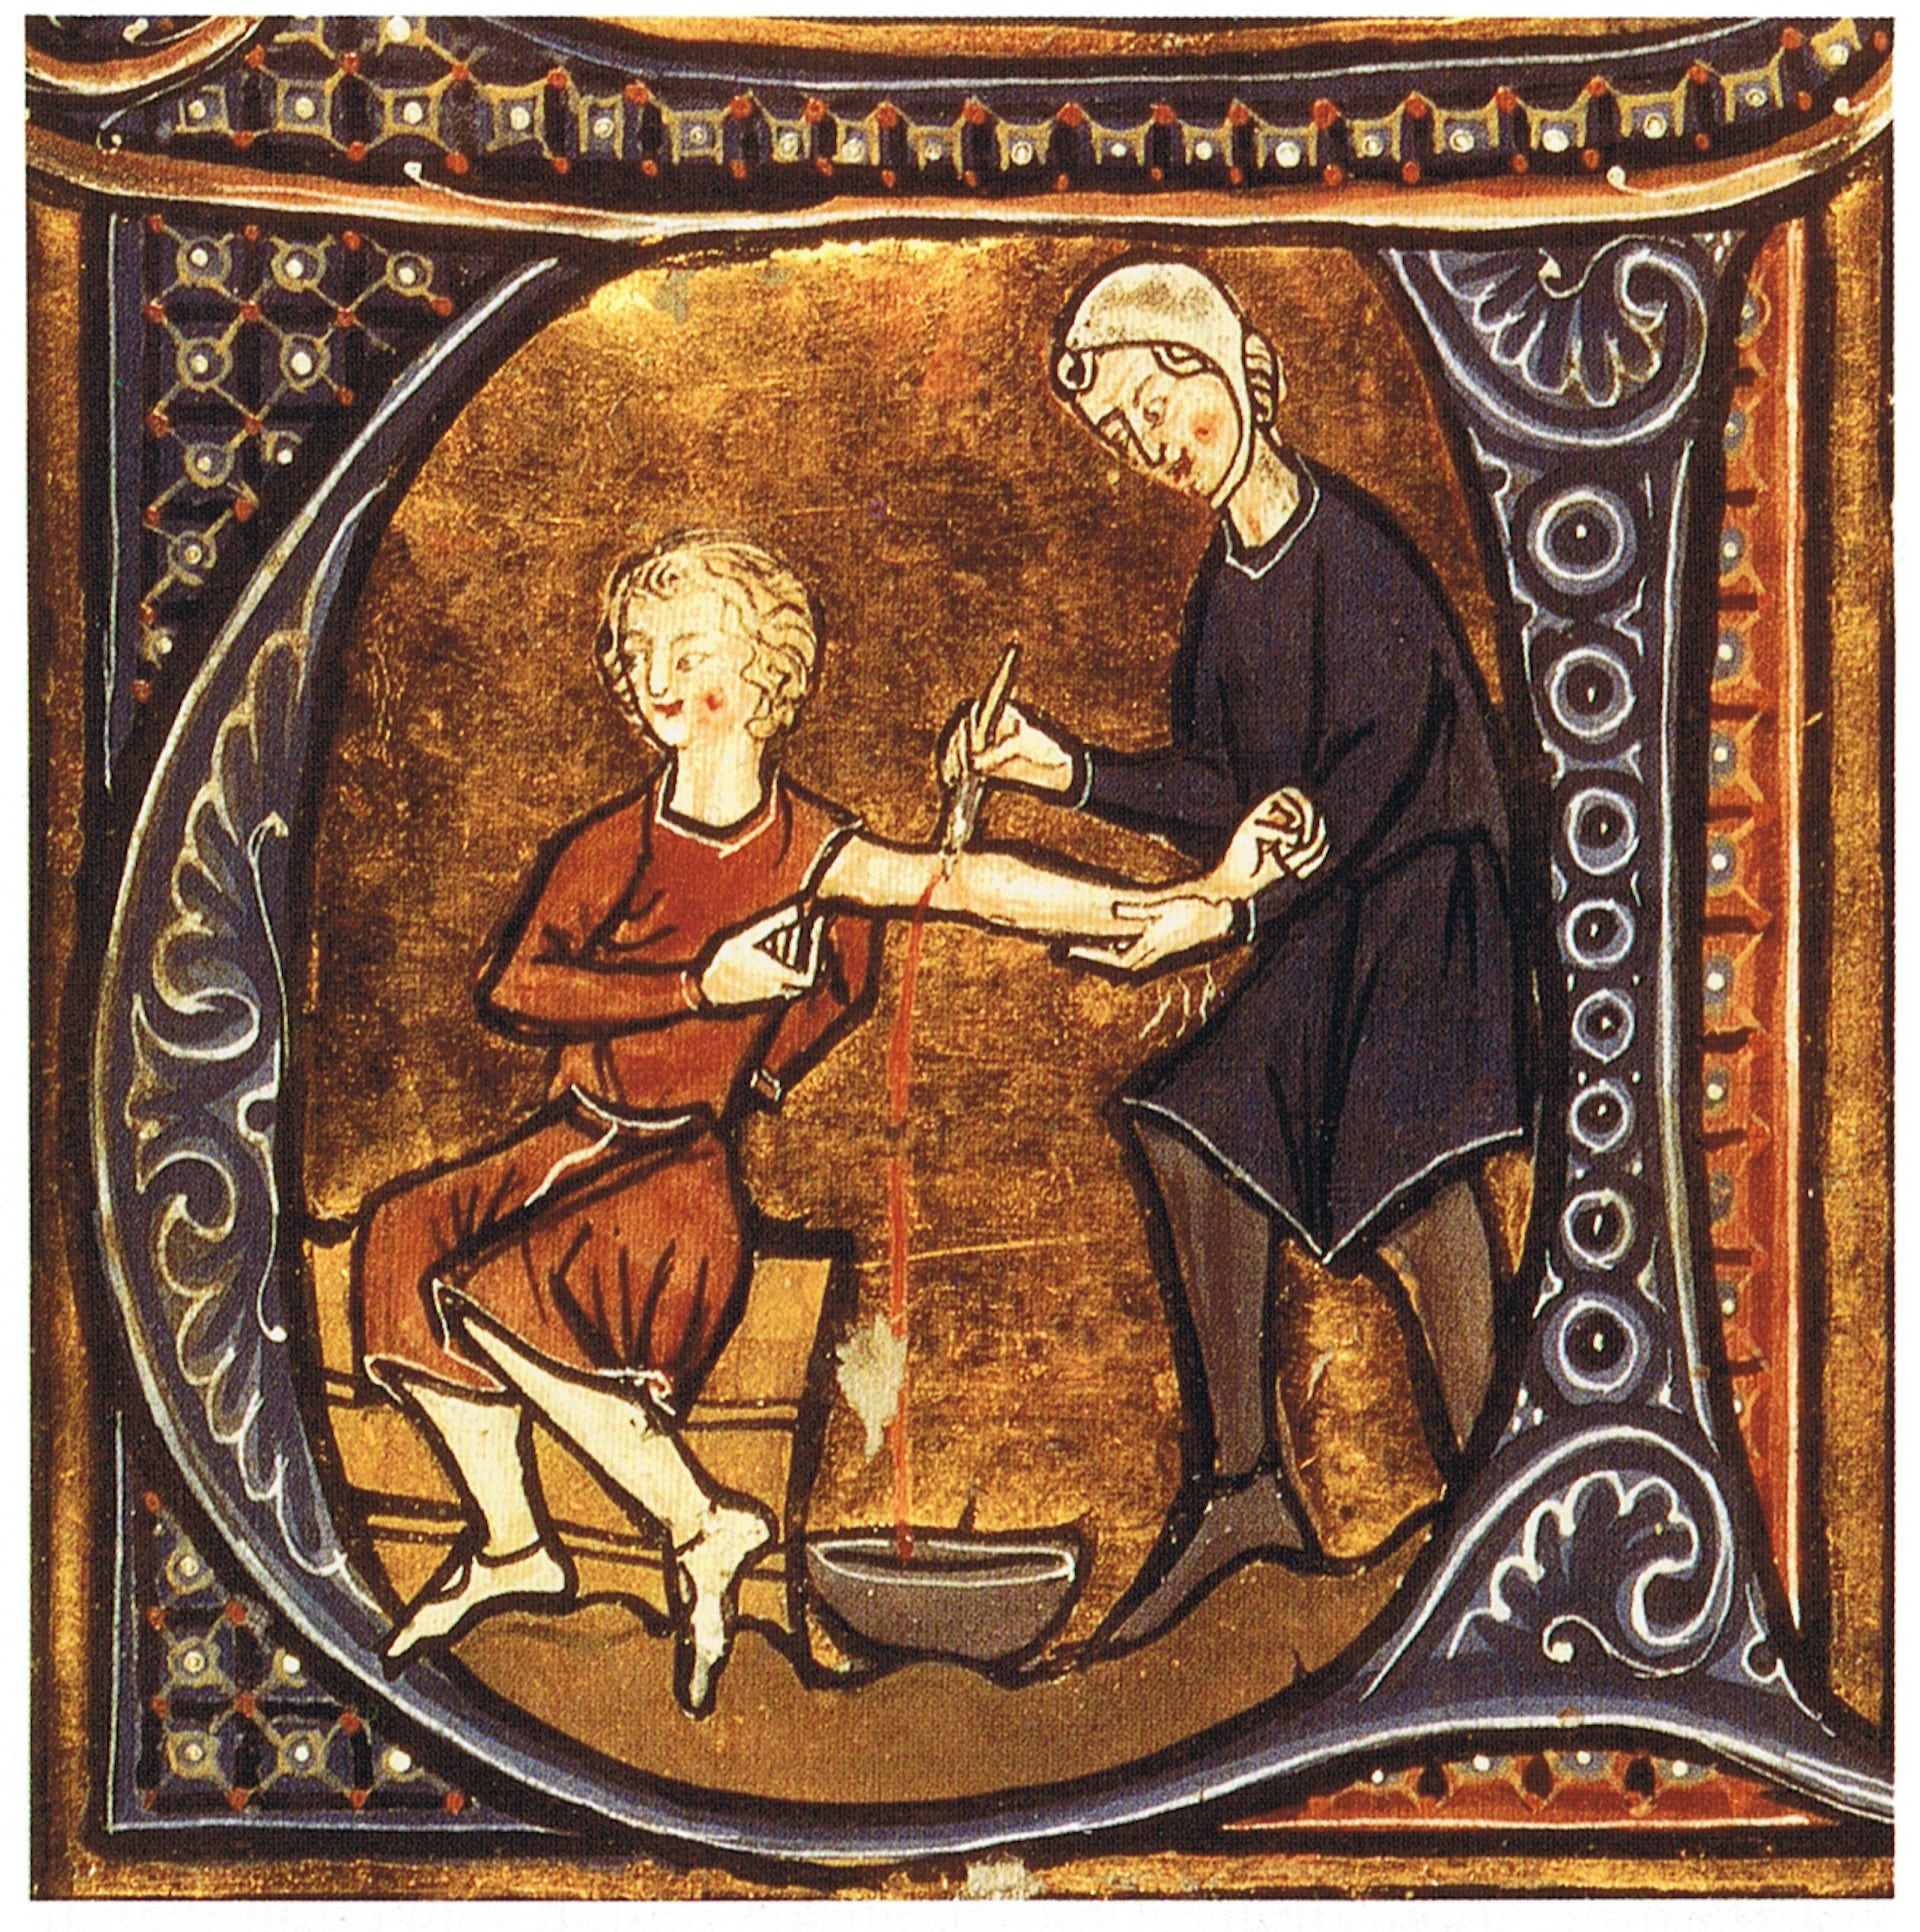 Mainstream medieval inflation medicine